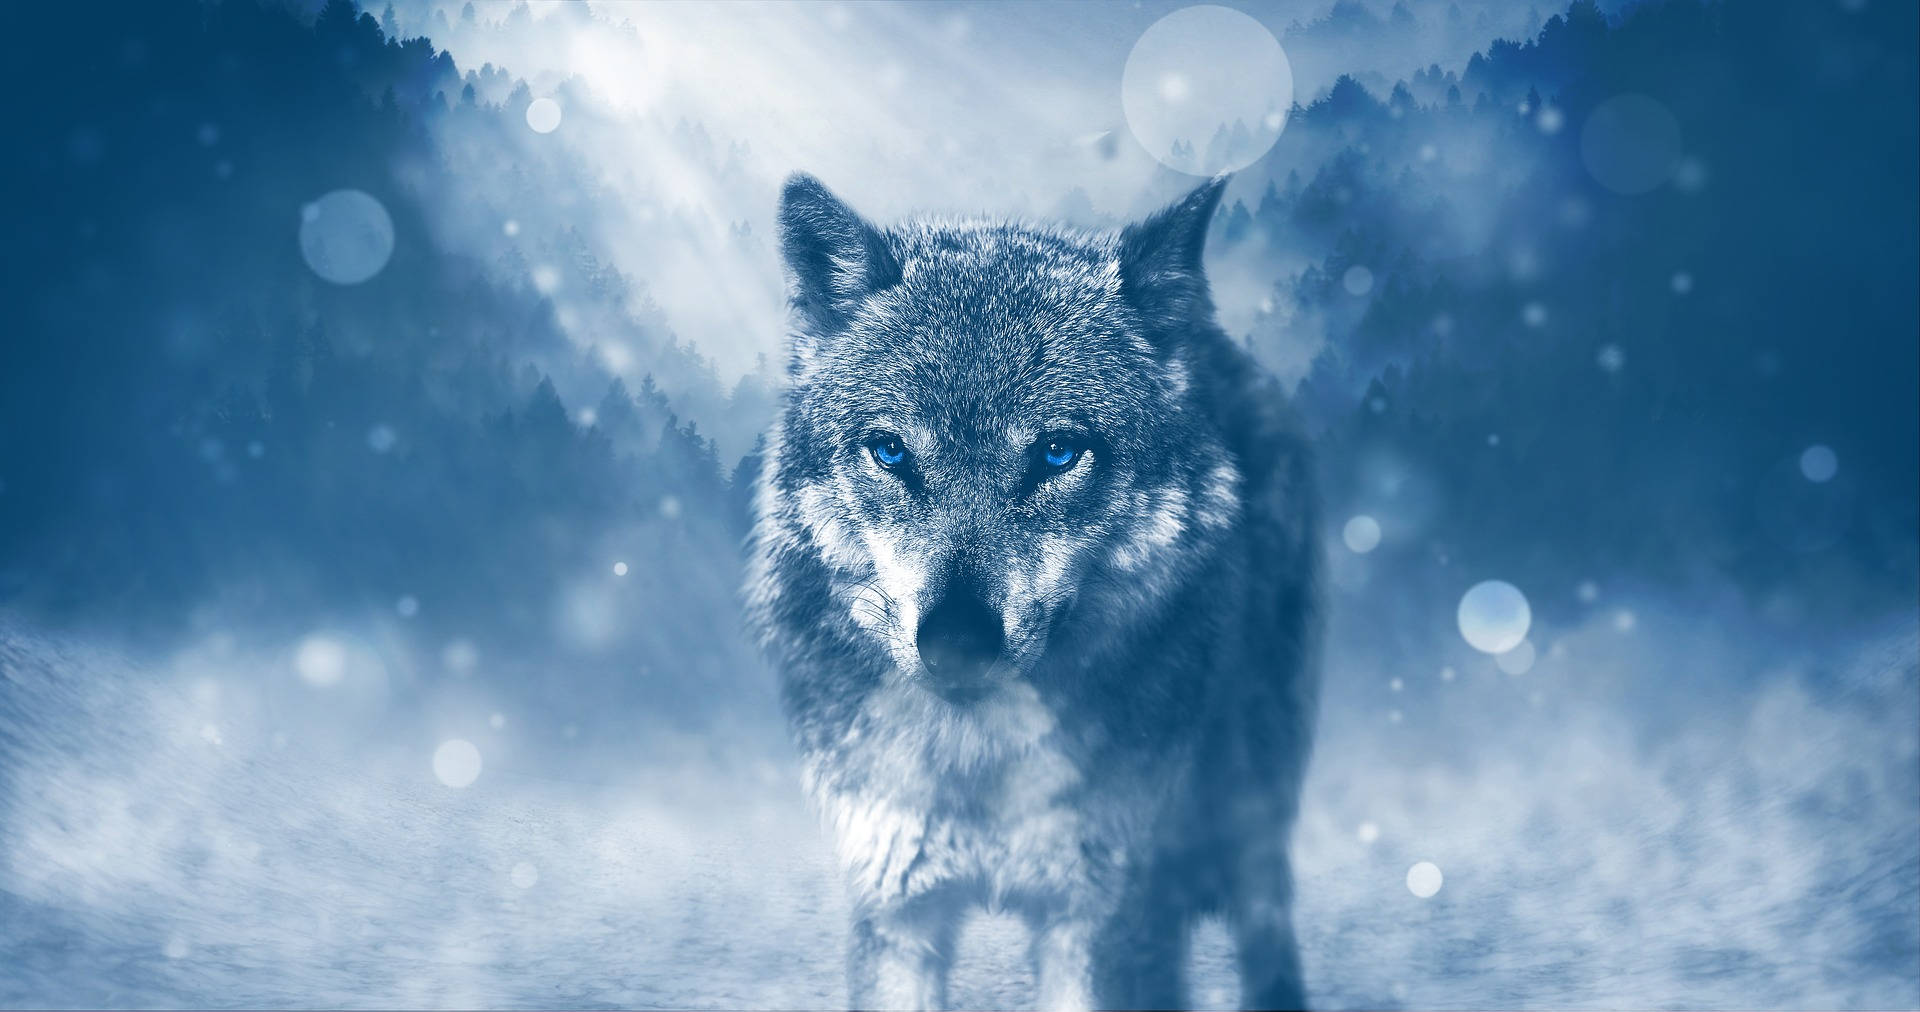 Hd Wolf Winter Background